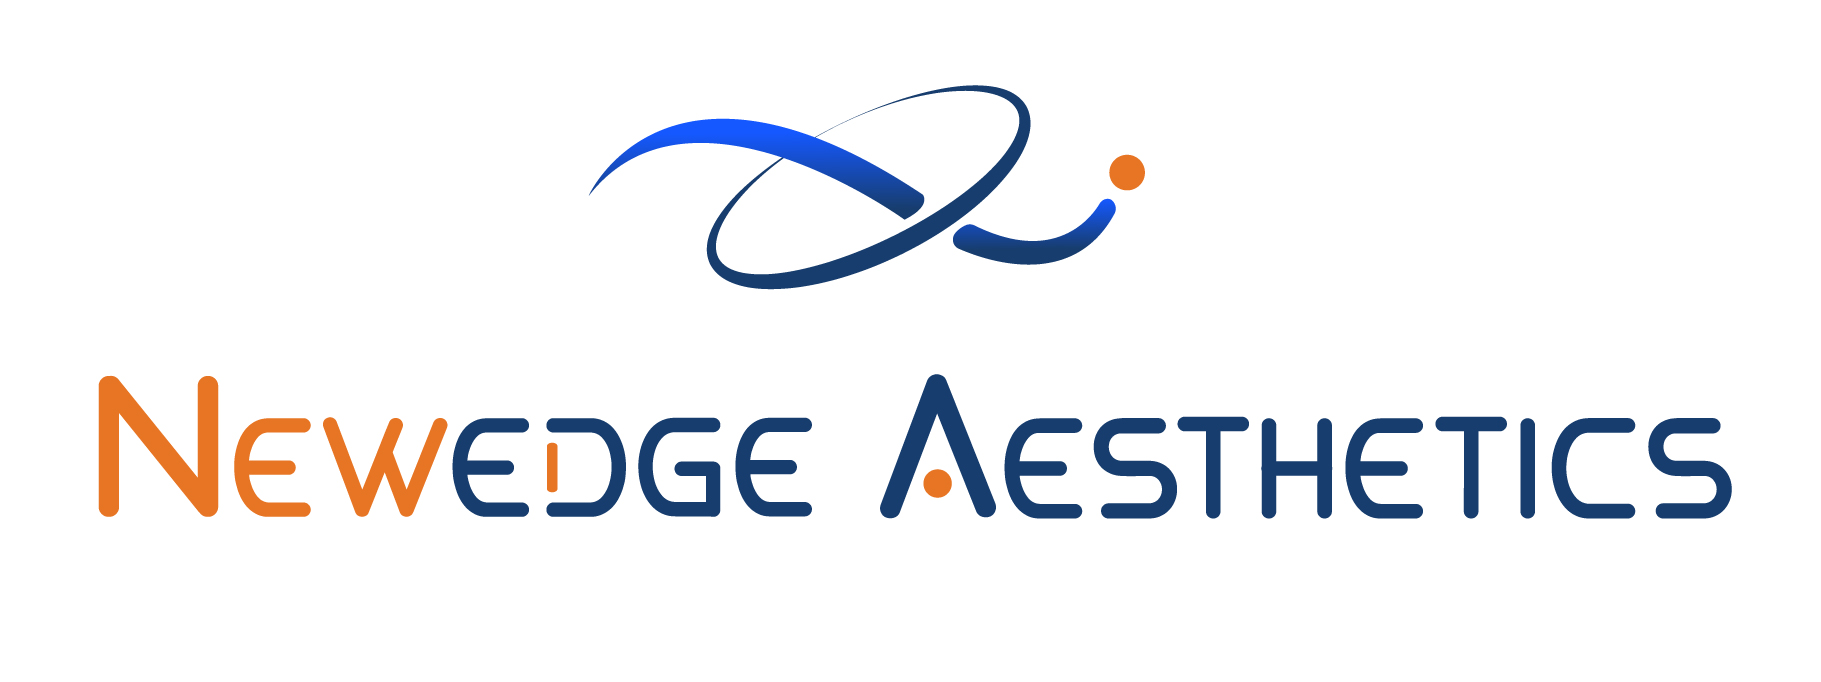 logo newedge